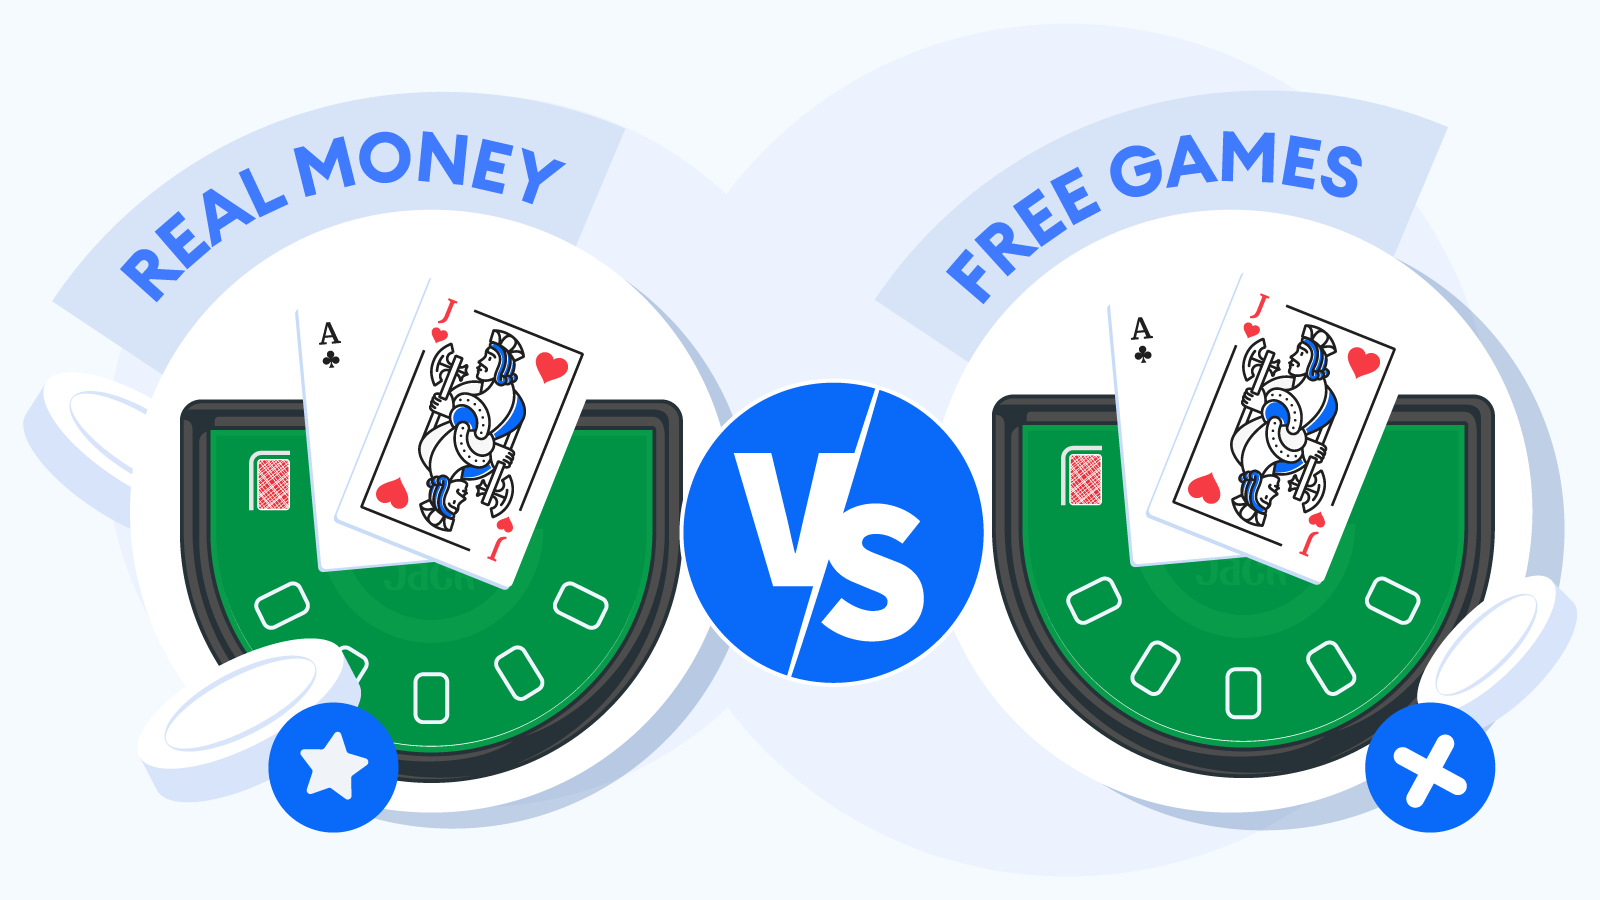 Playing Live Real Money Blackjack vs. Free Games